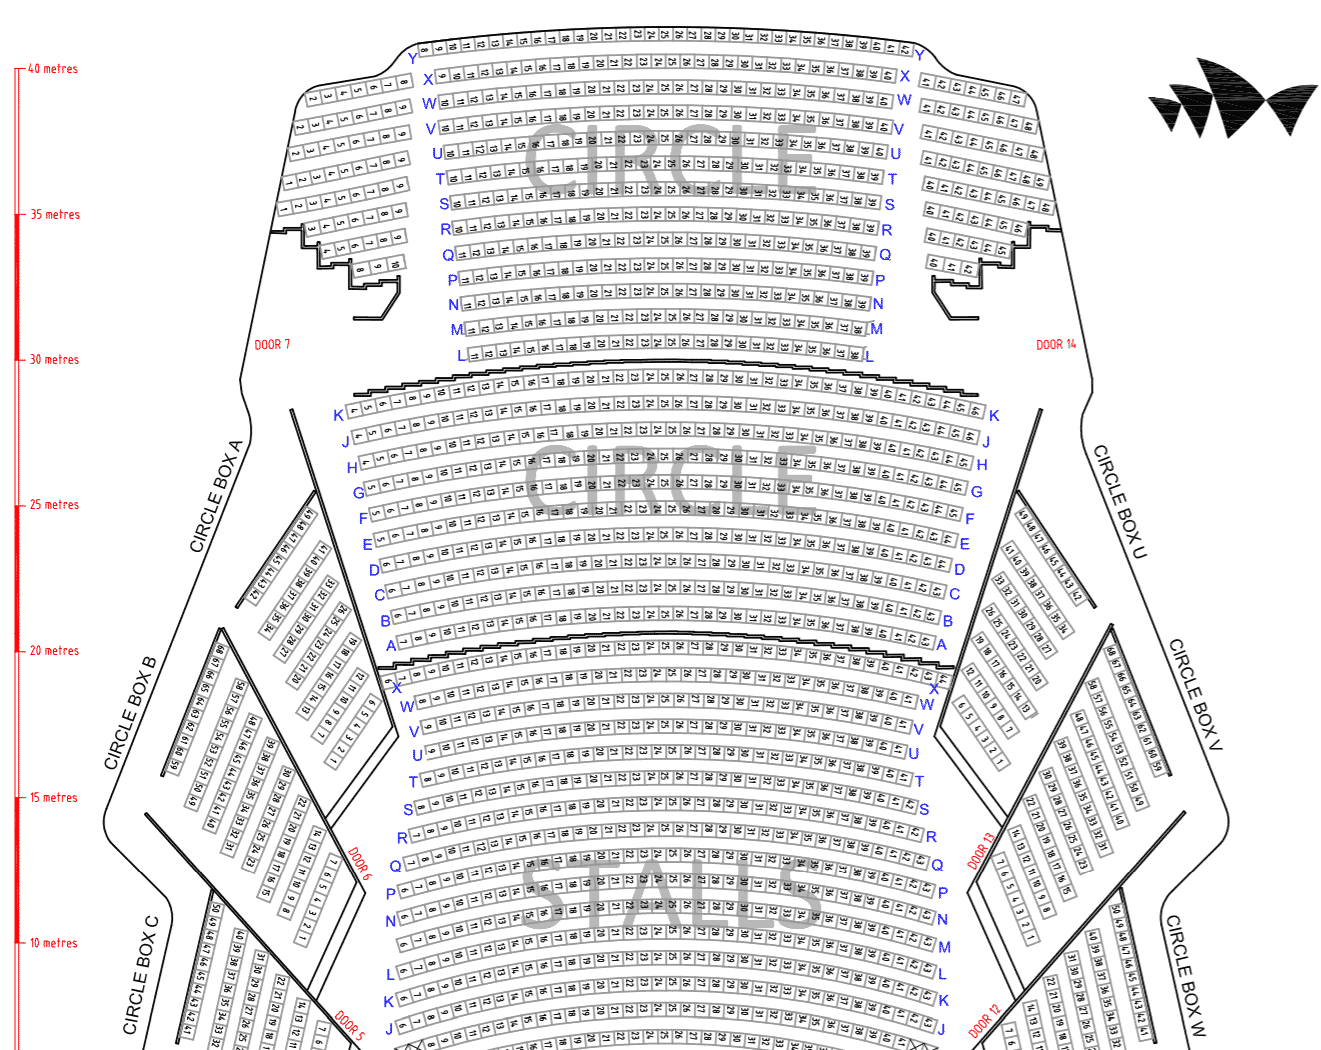 Sydney Opera House Seating Map